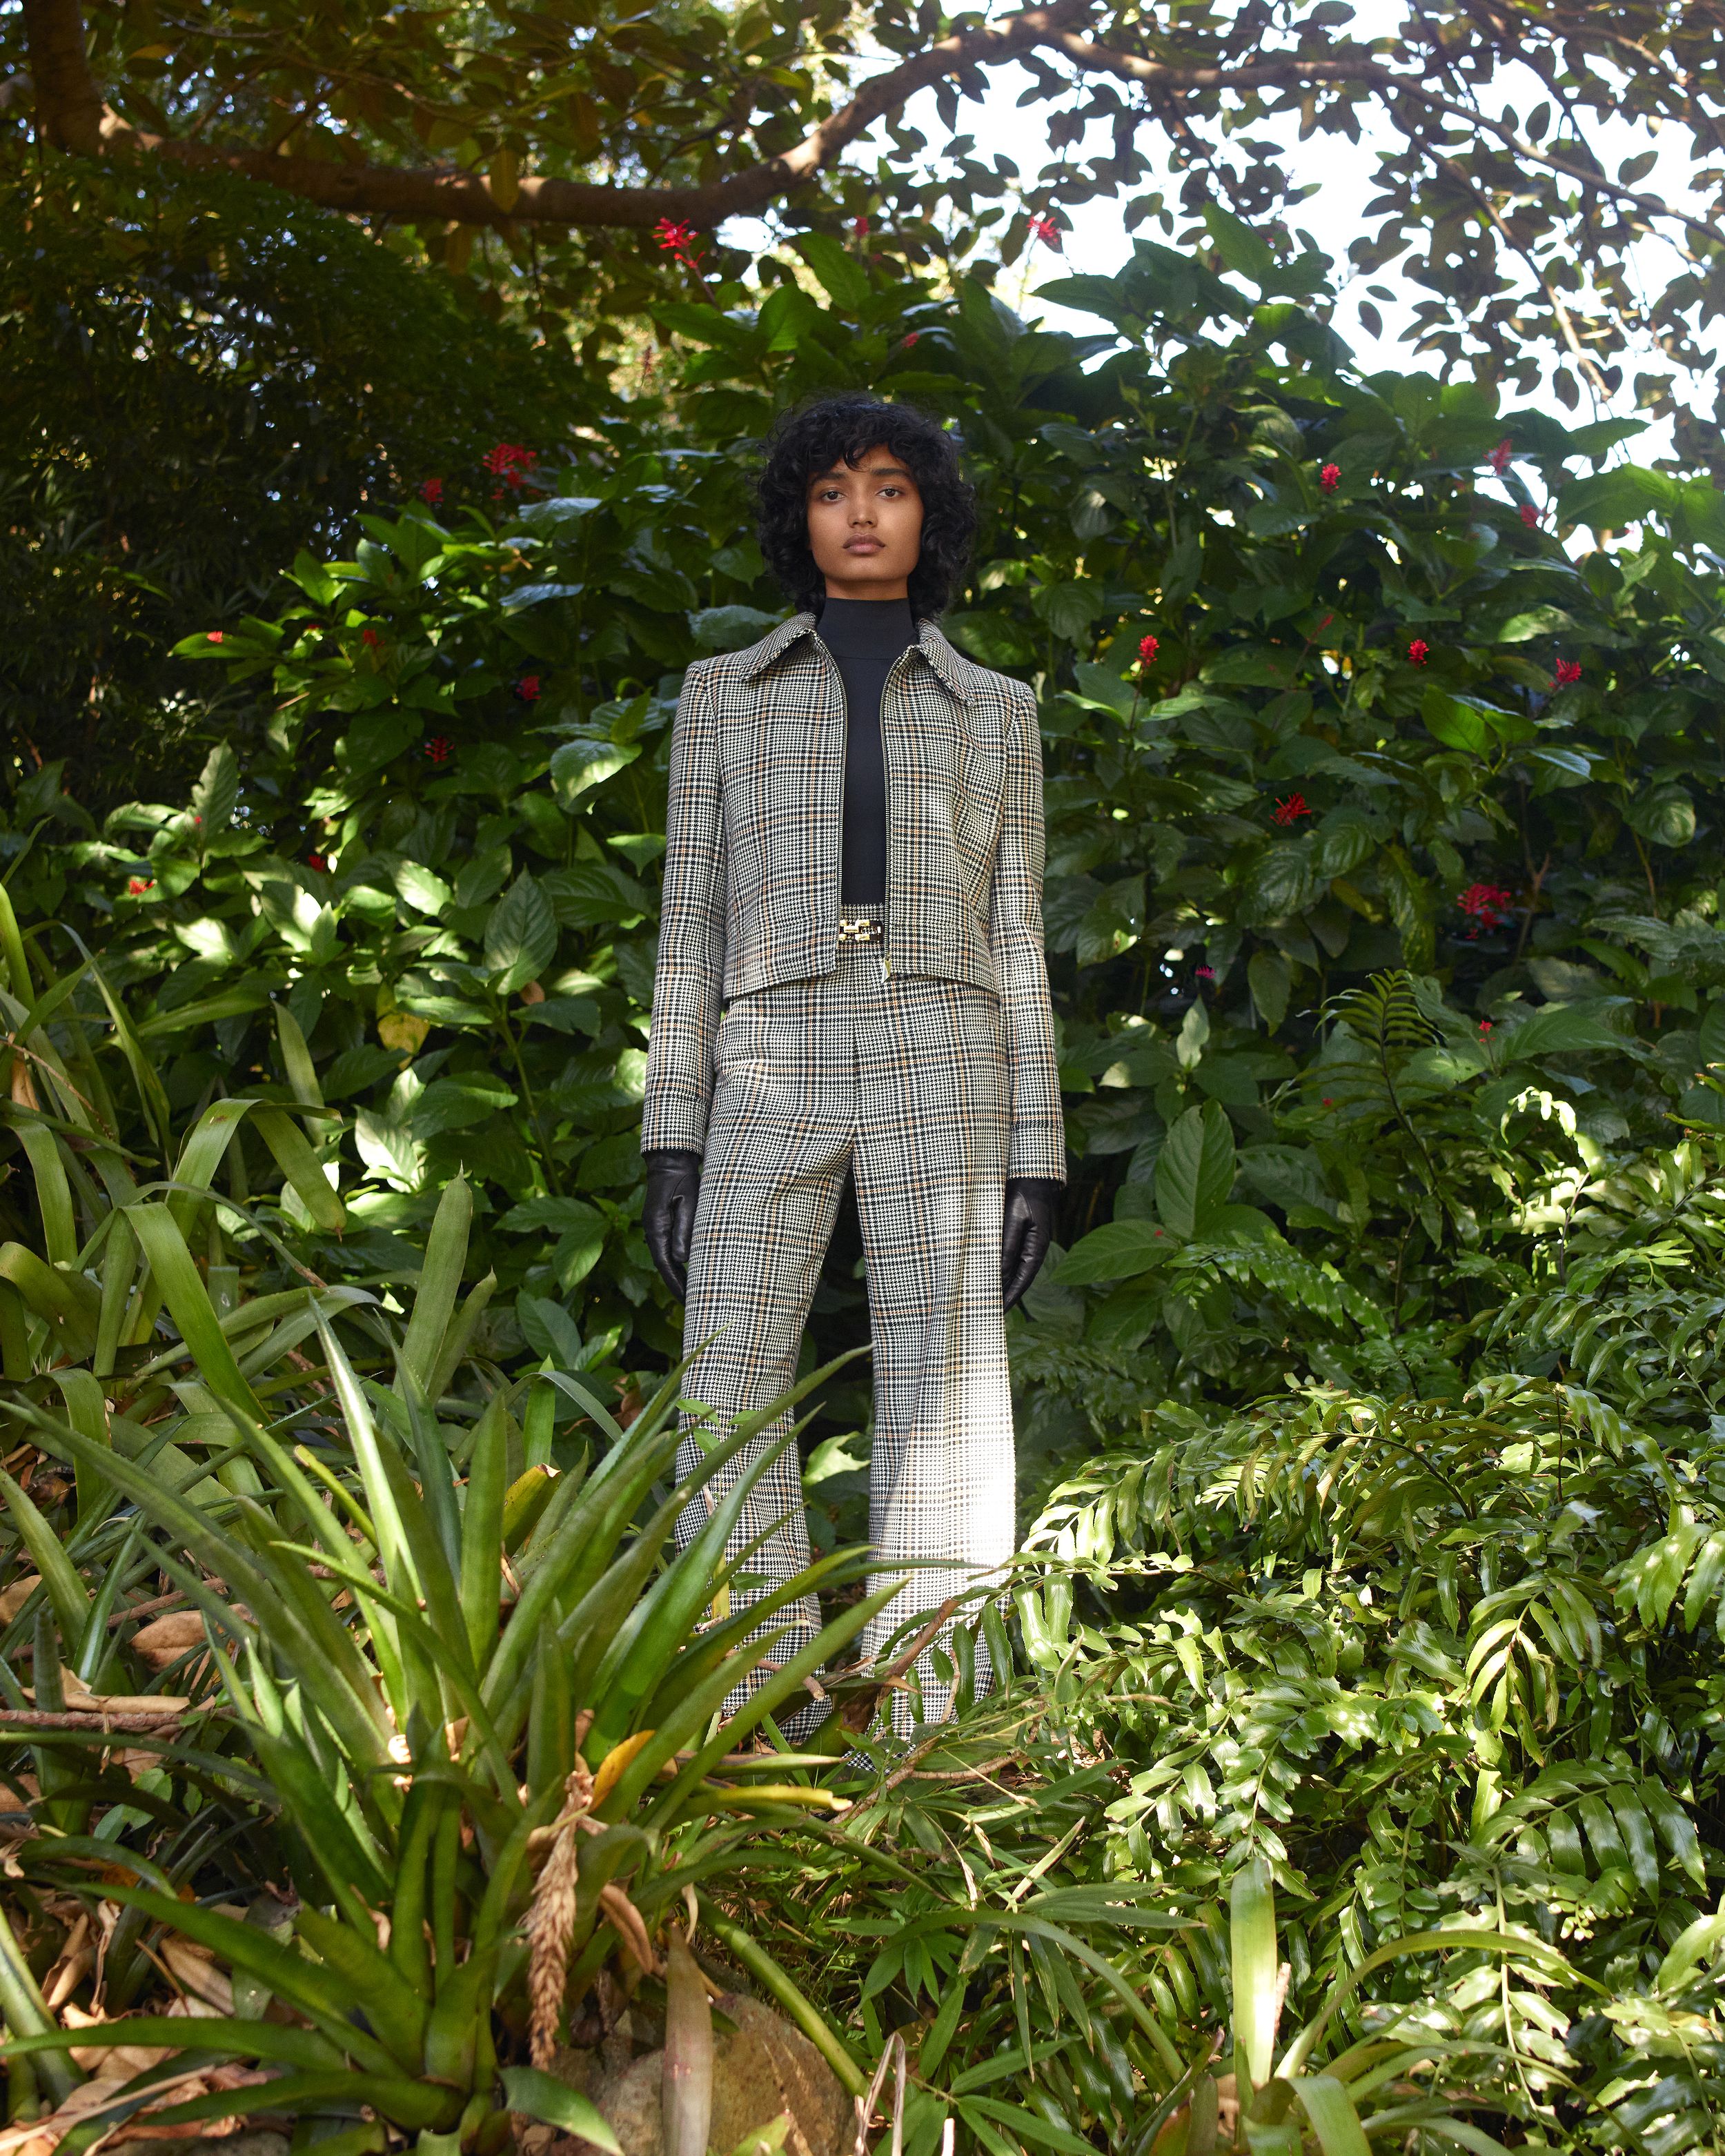 Model standing amongst dense greenery wearing a matching grey plaid jacket and trousers